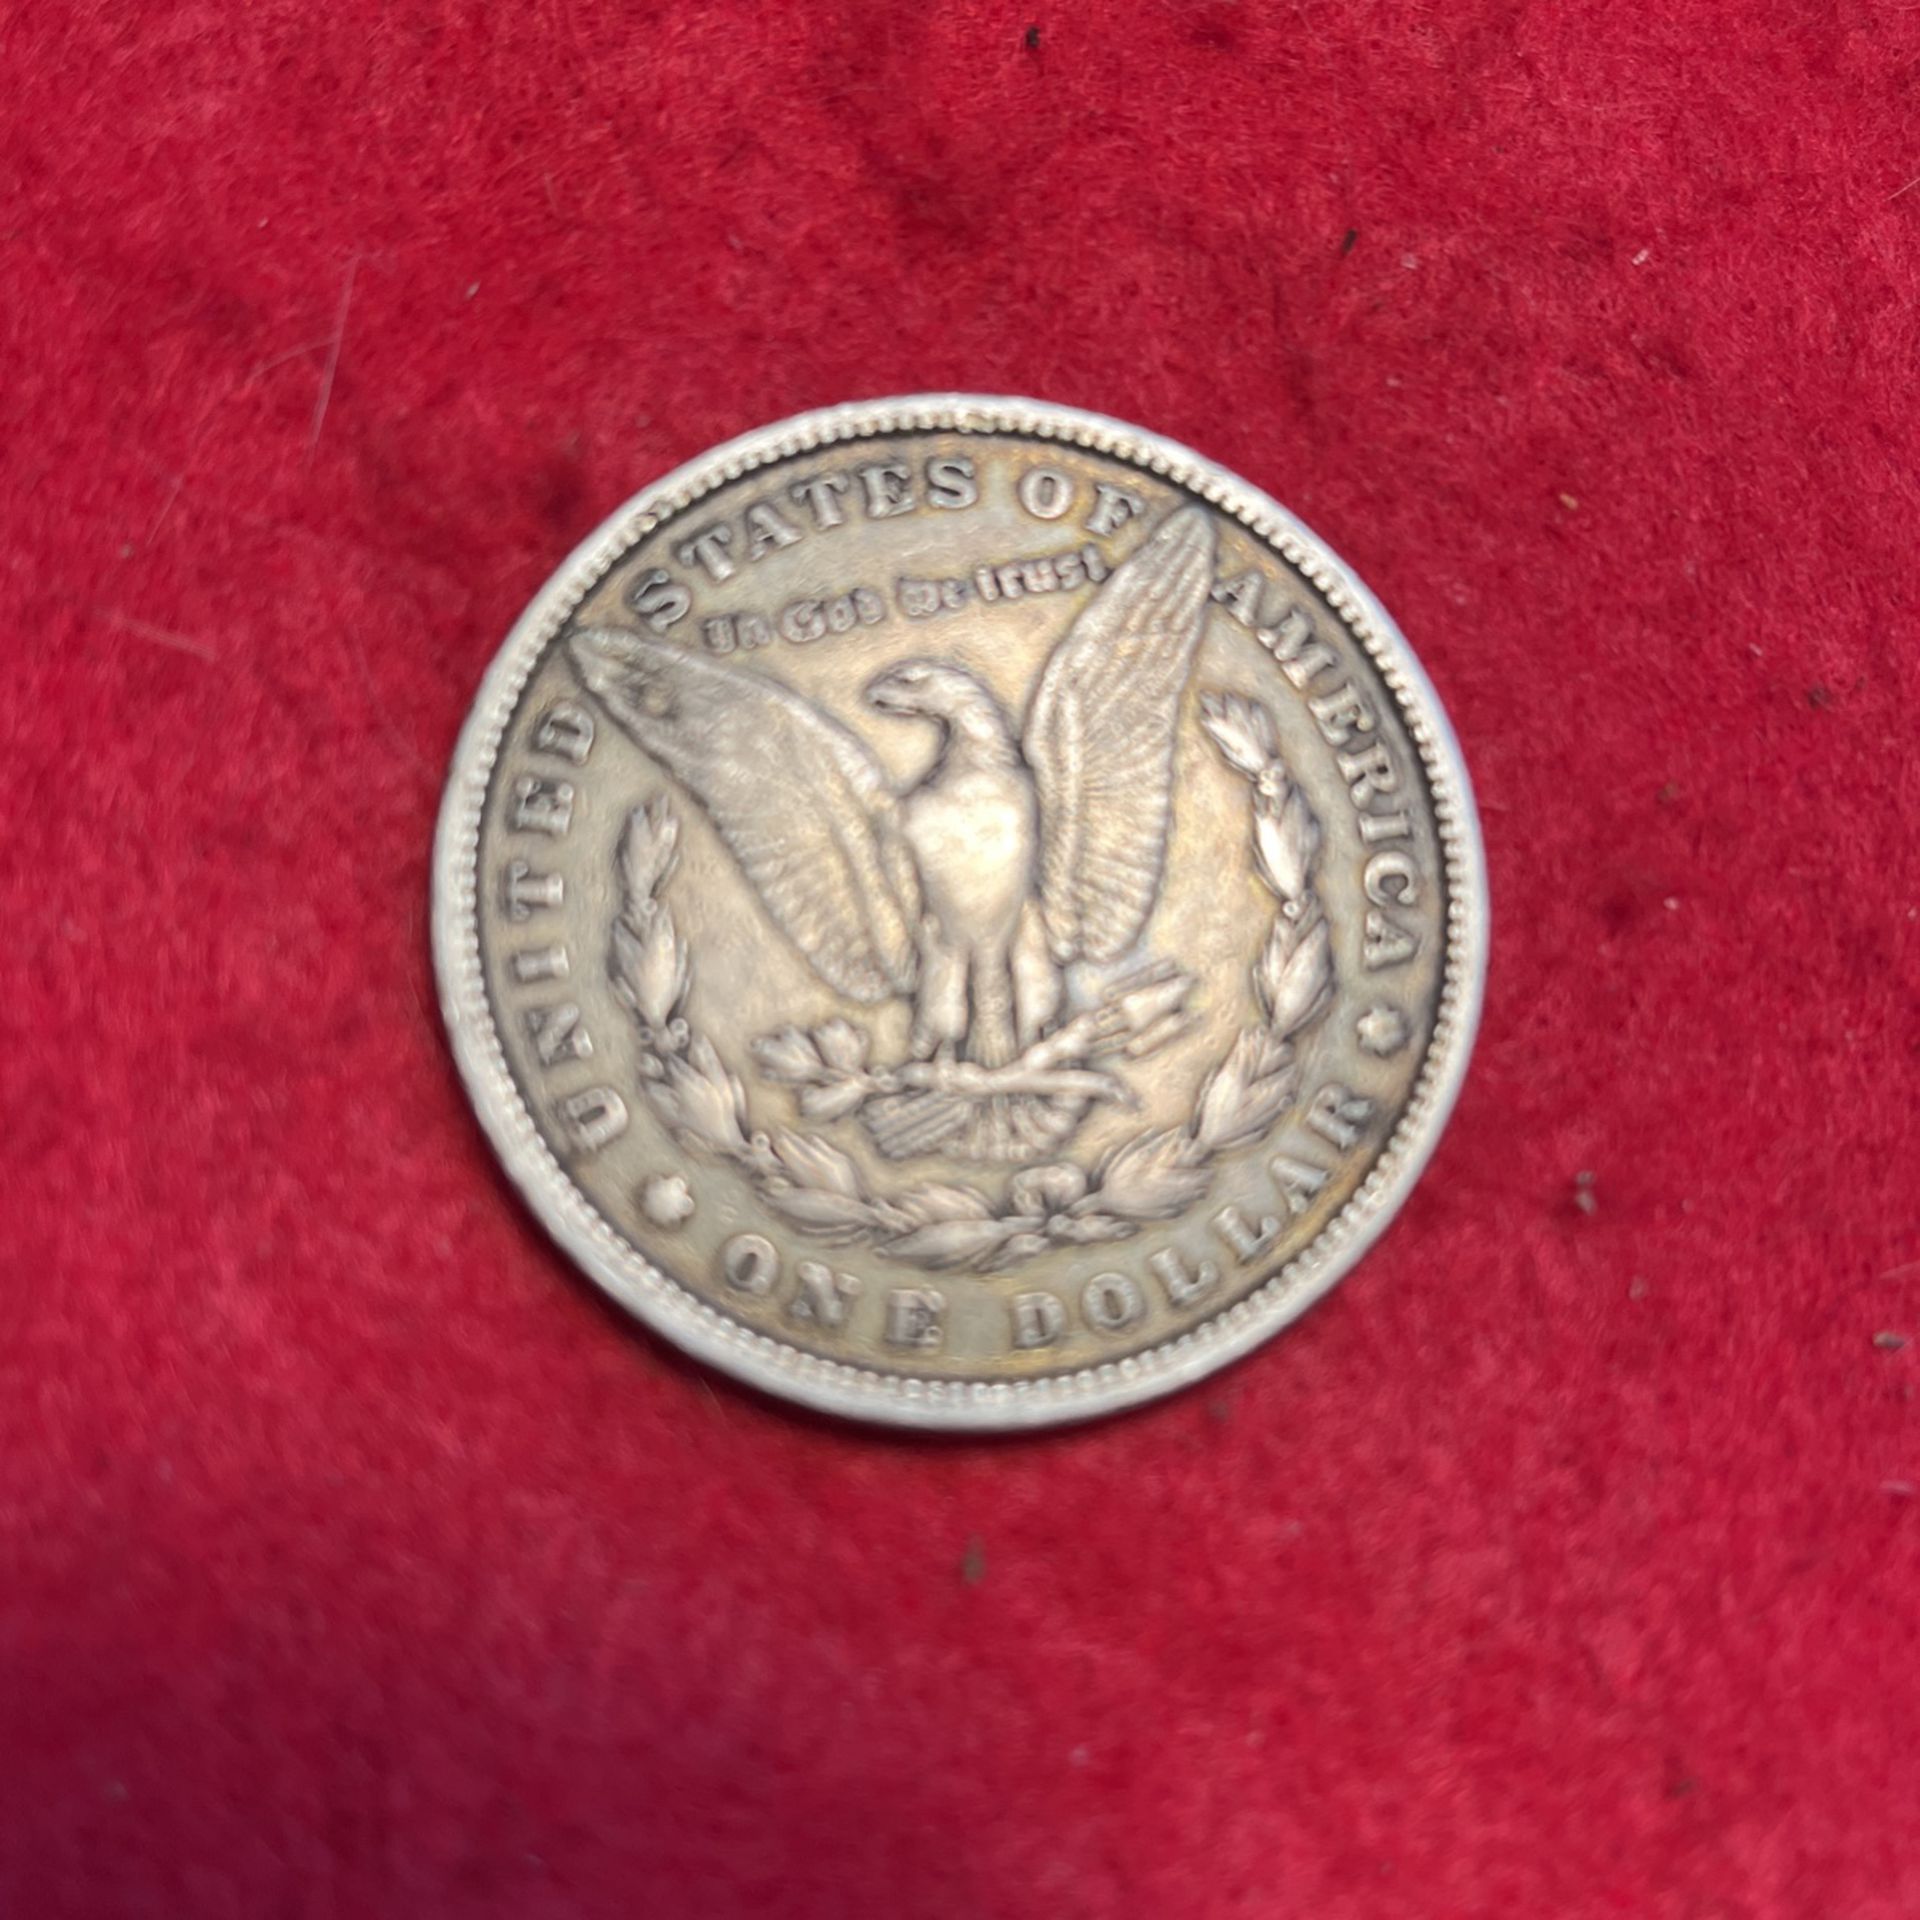 1879 Morgan Dollar 